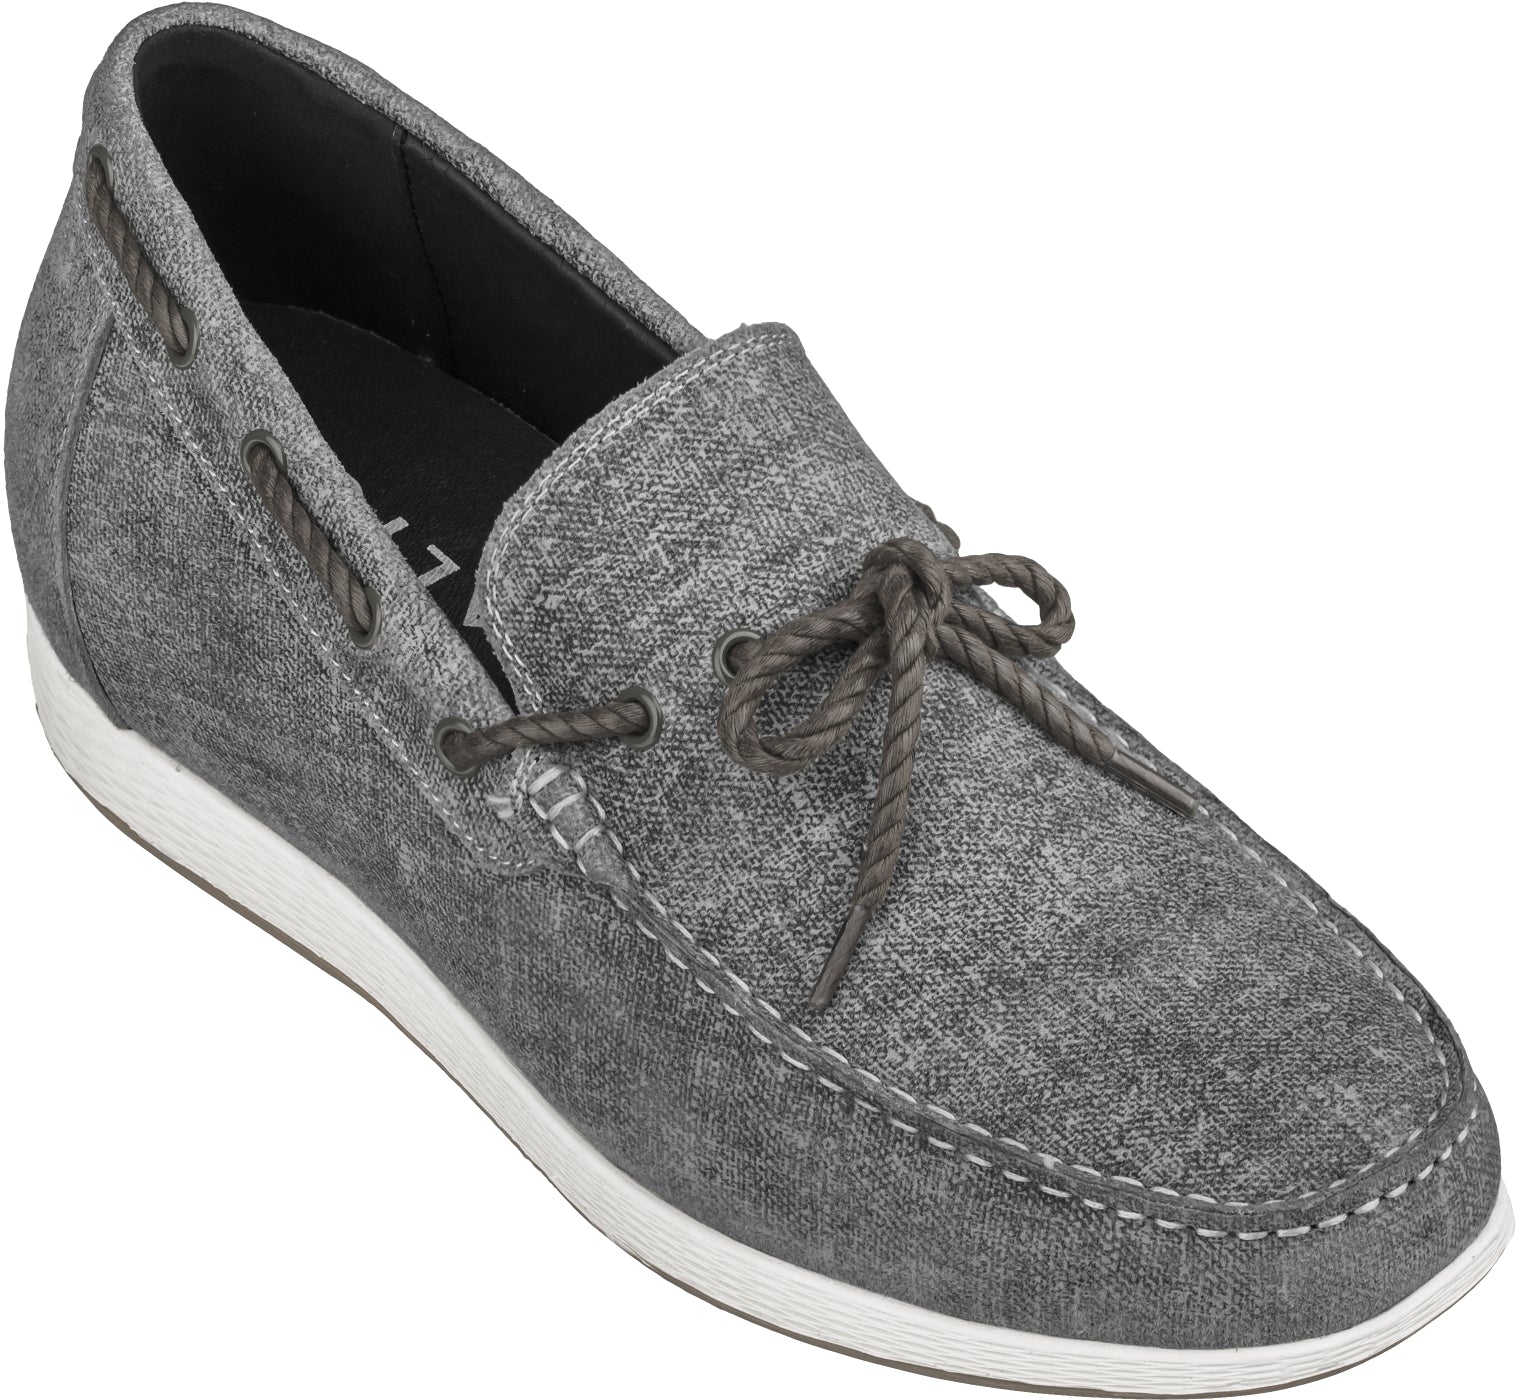 CALTO Denim Grey Boat Shoes - 2.4 Inches - S1101